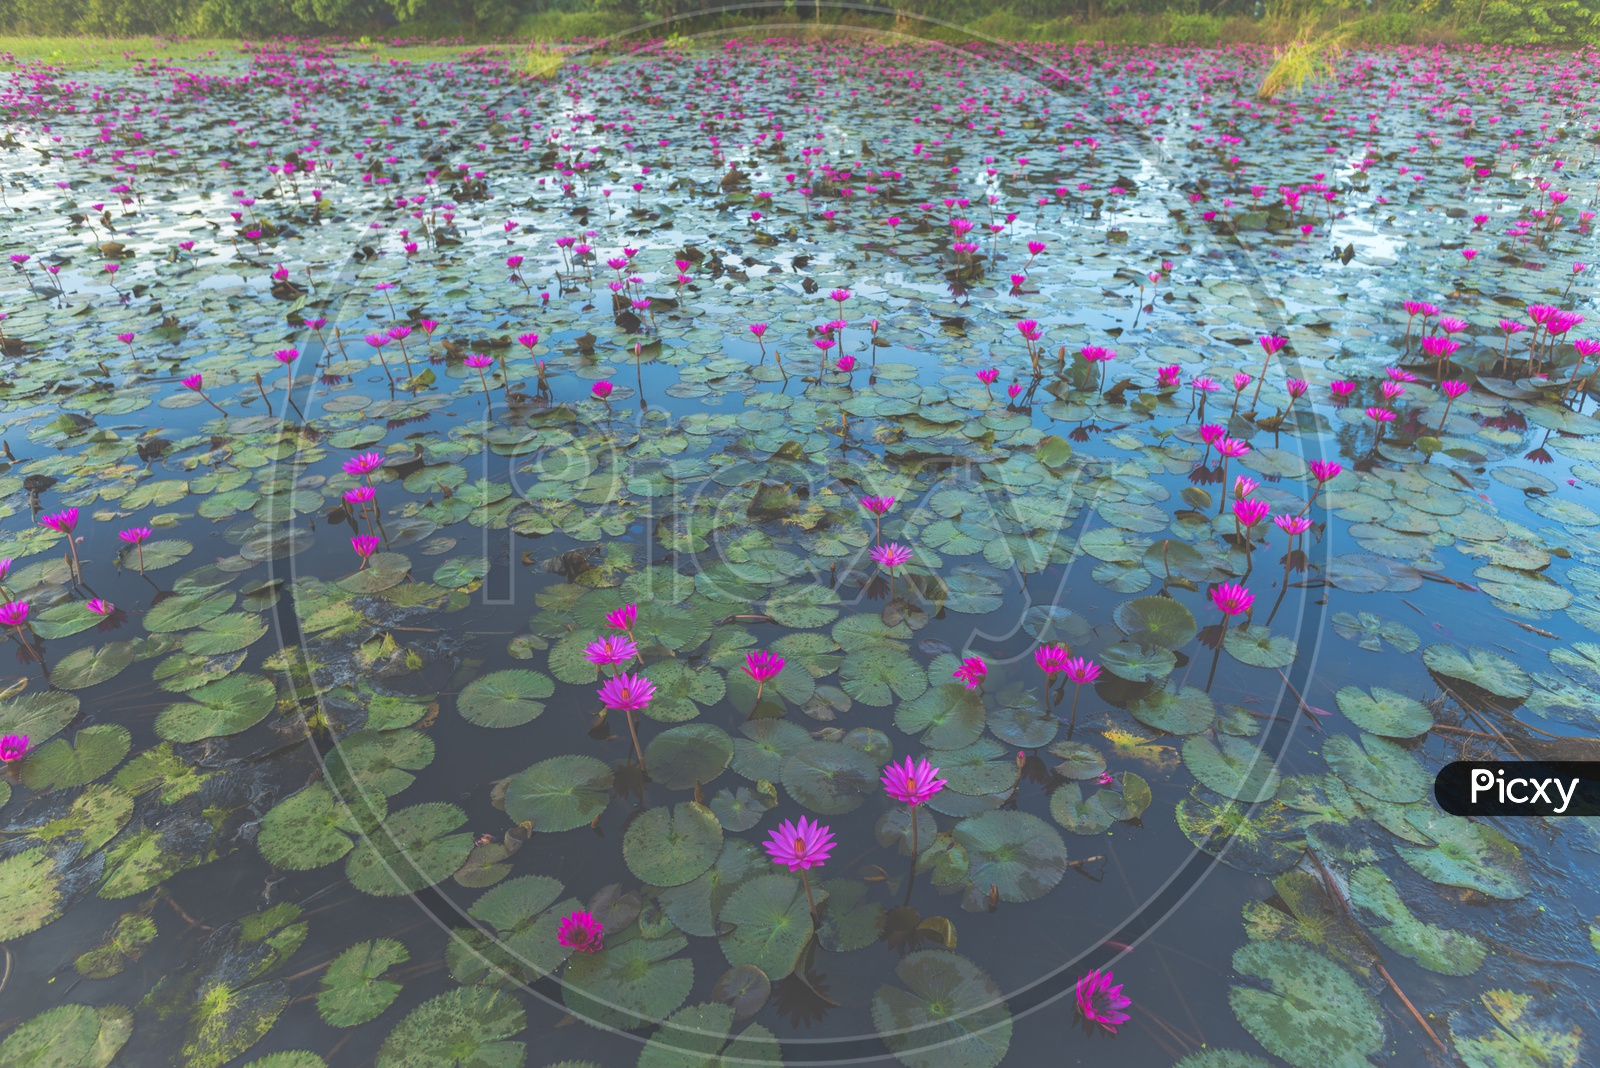 Wide view of lotus pond - vintage filter